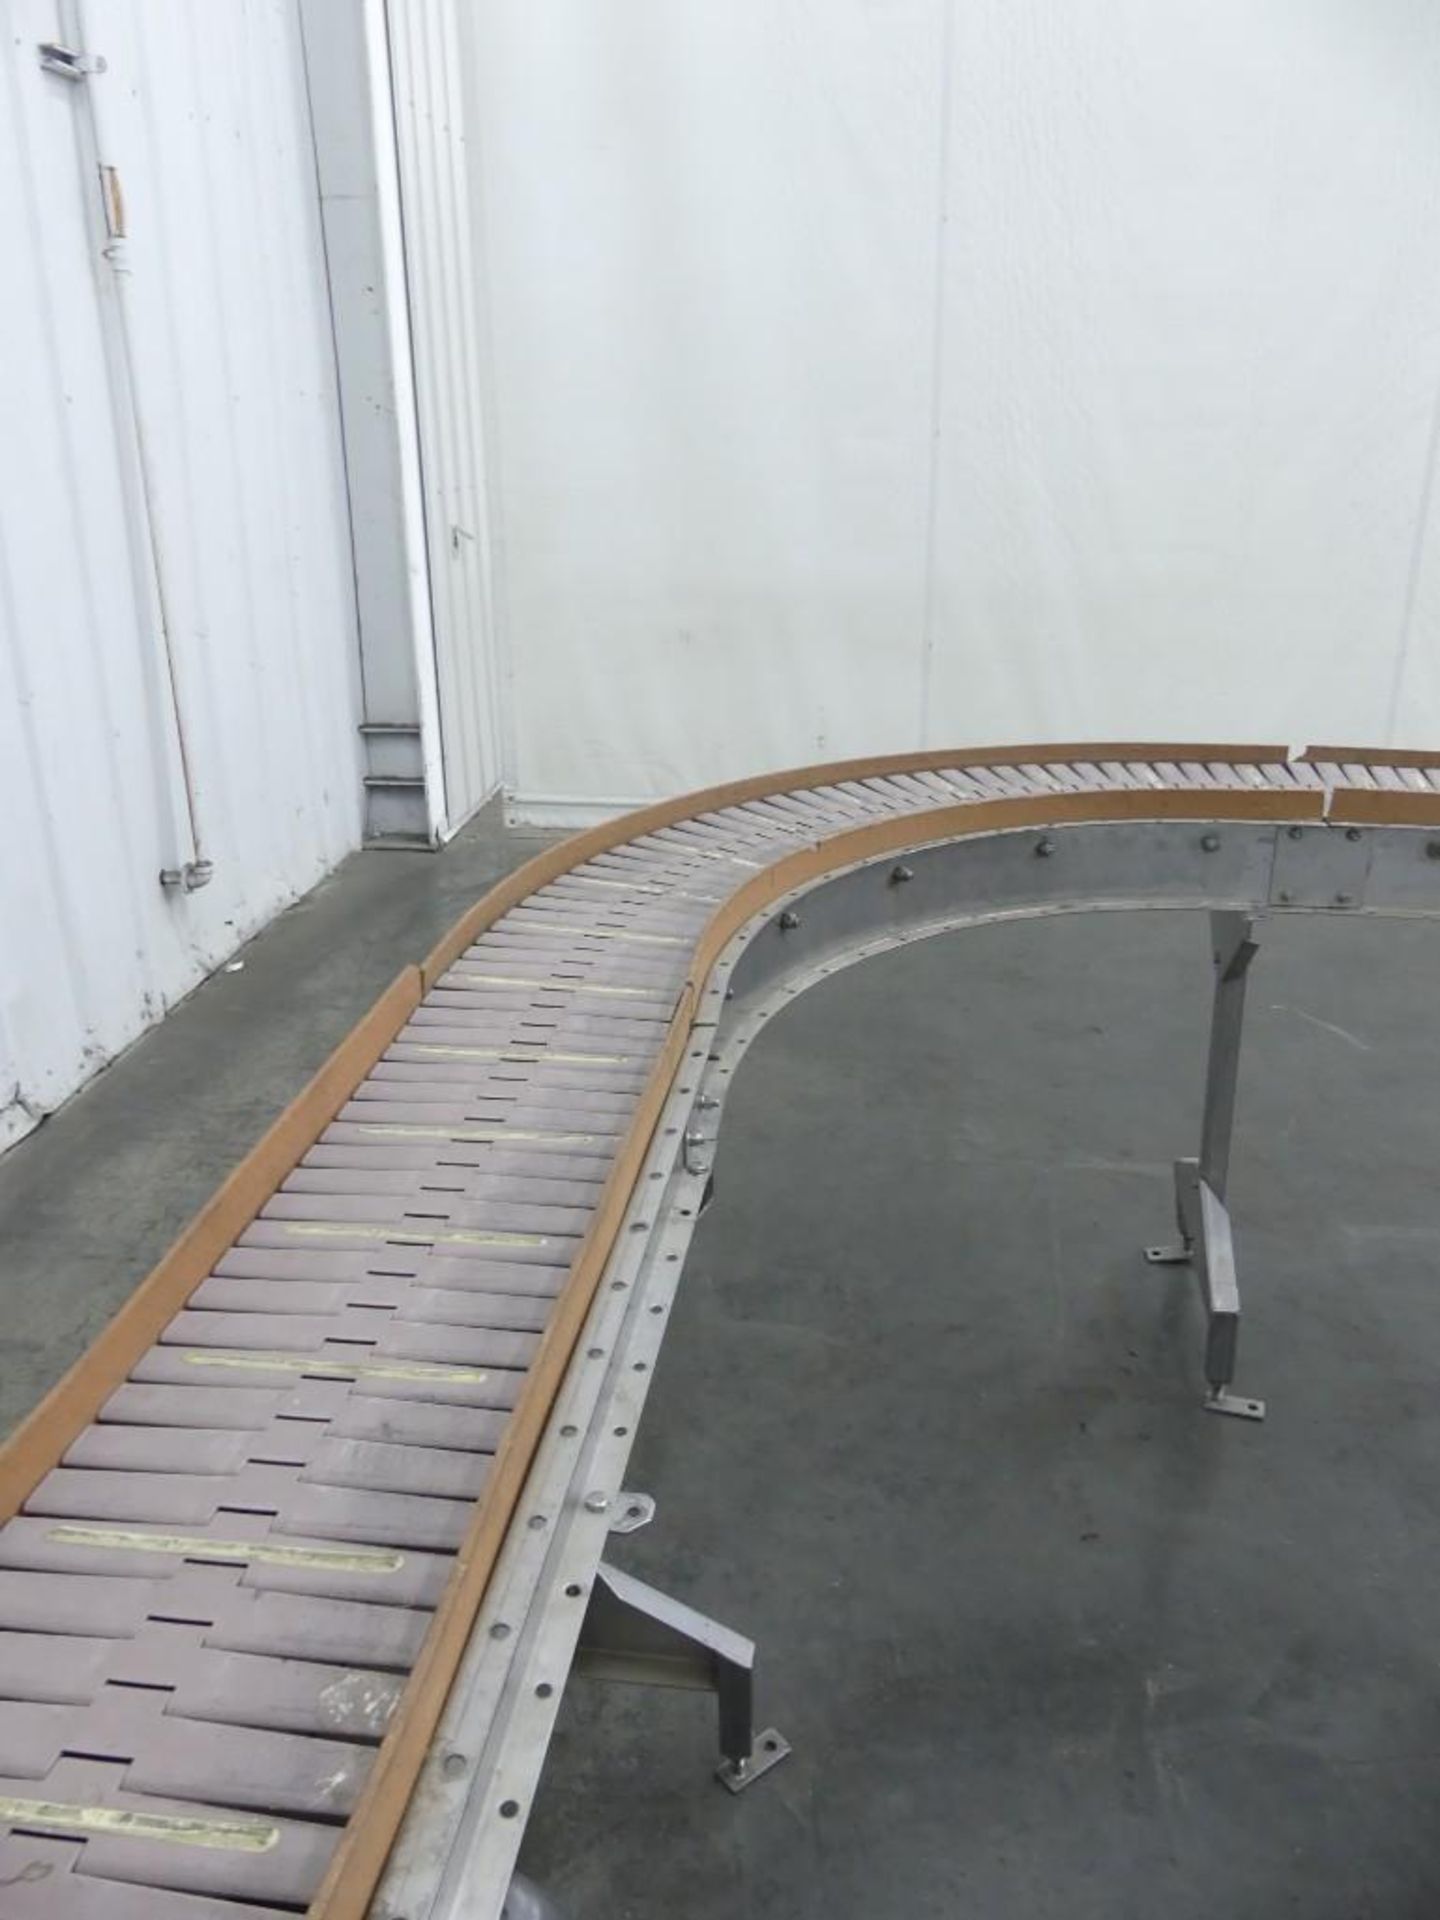 Serpentine Table-Top Conveyor 10" Wide x 32' Long - Image 11 of 23